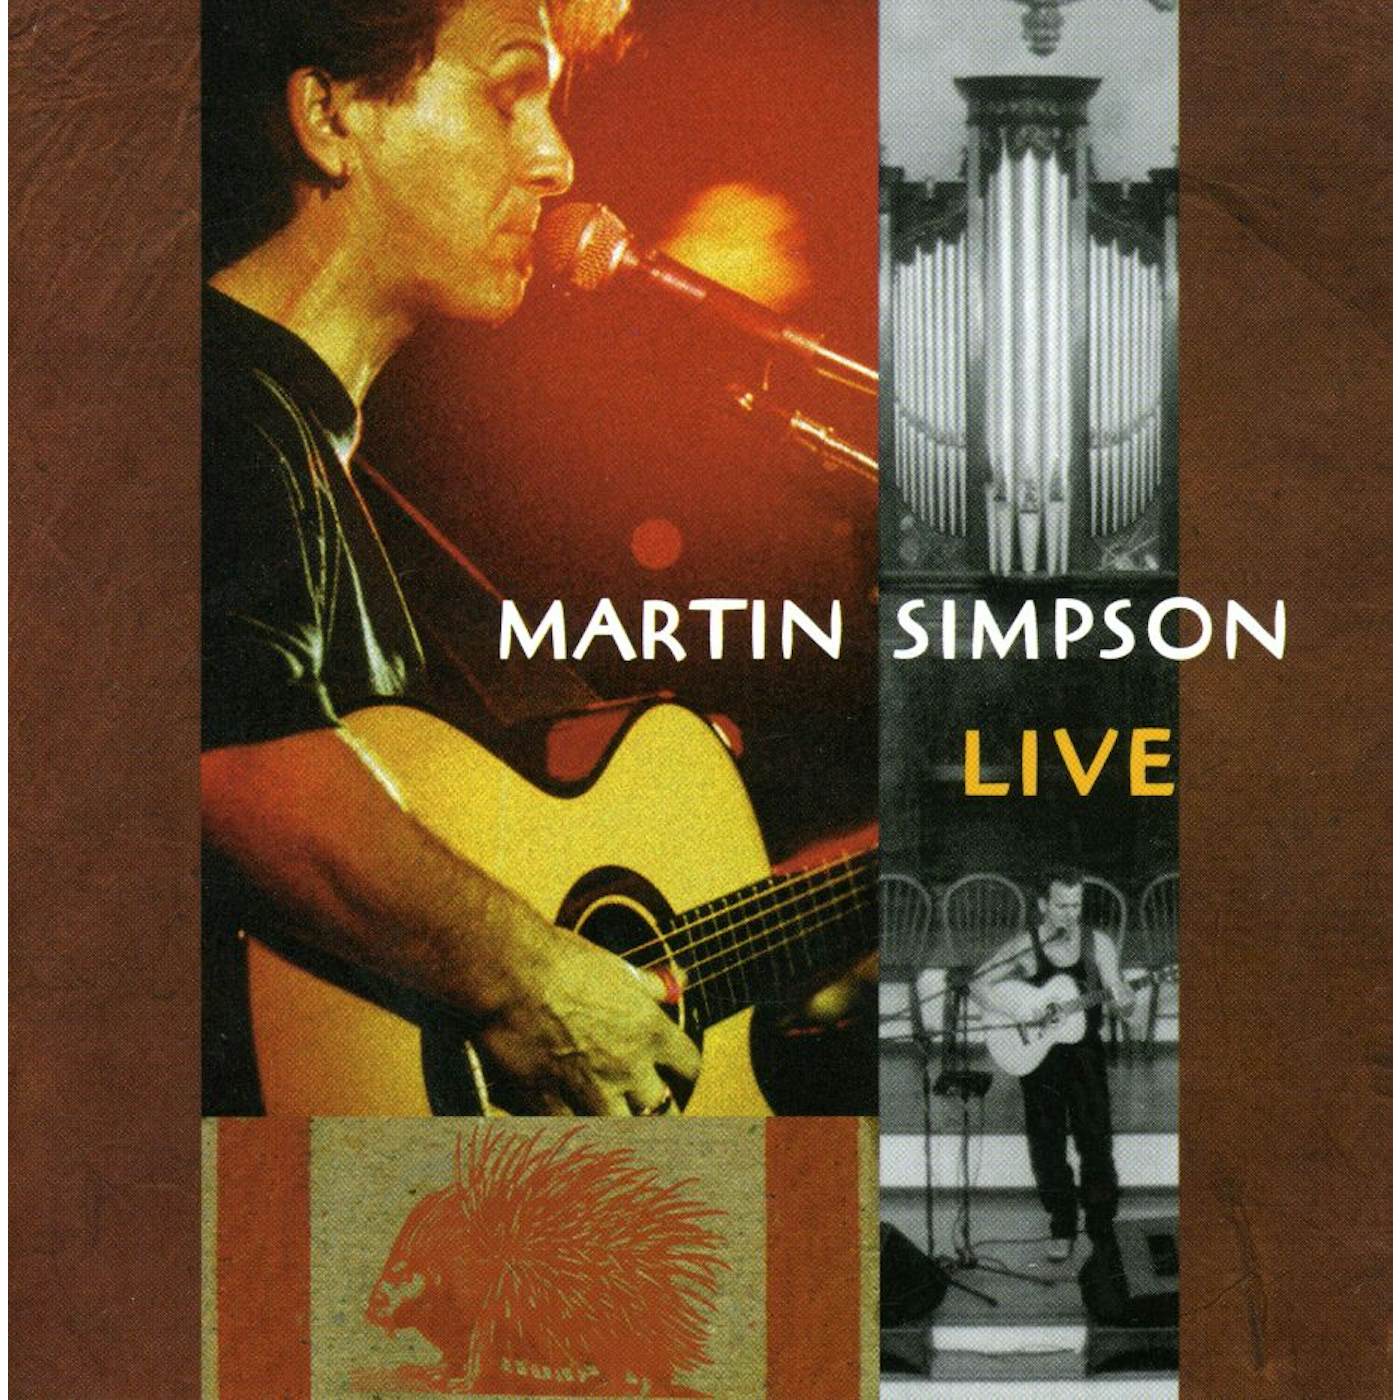 Martin Simpson LIVE CD